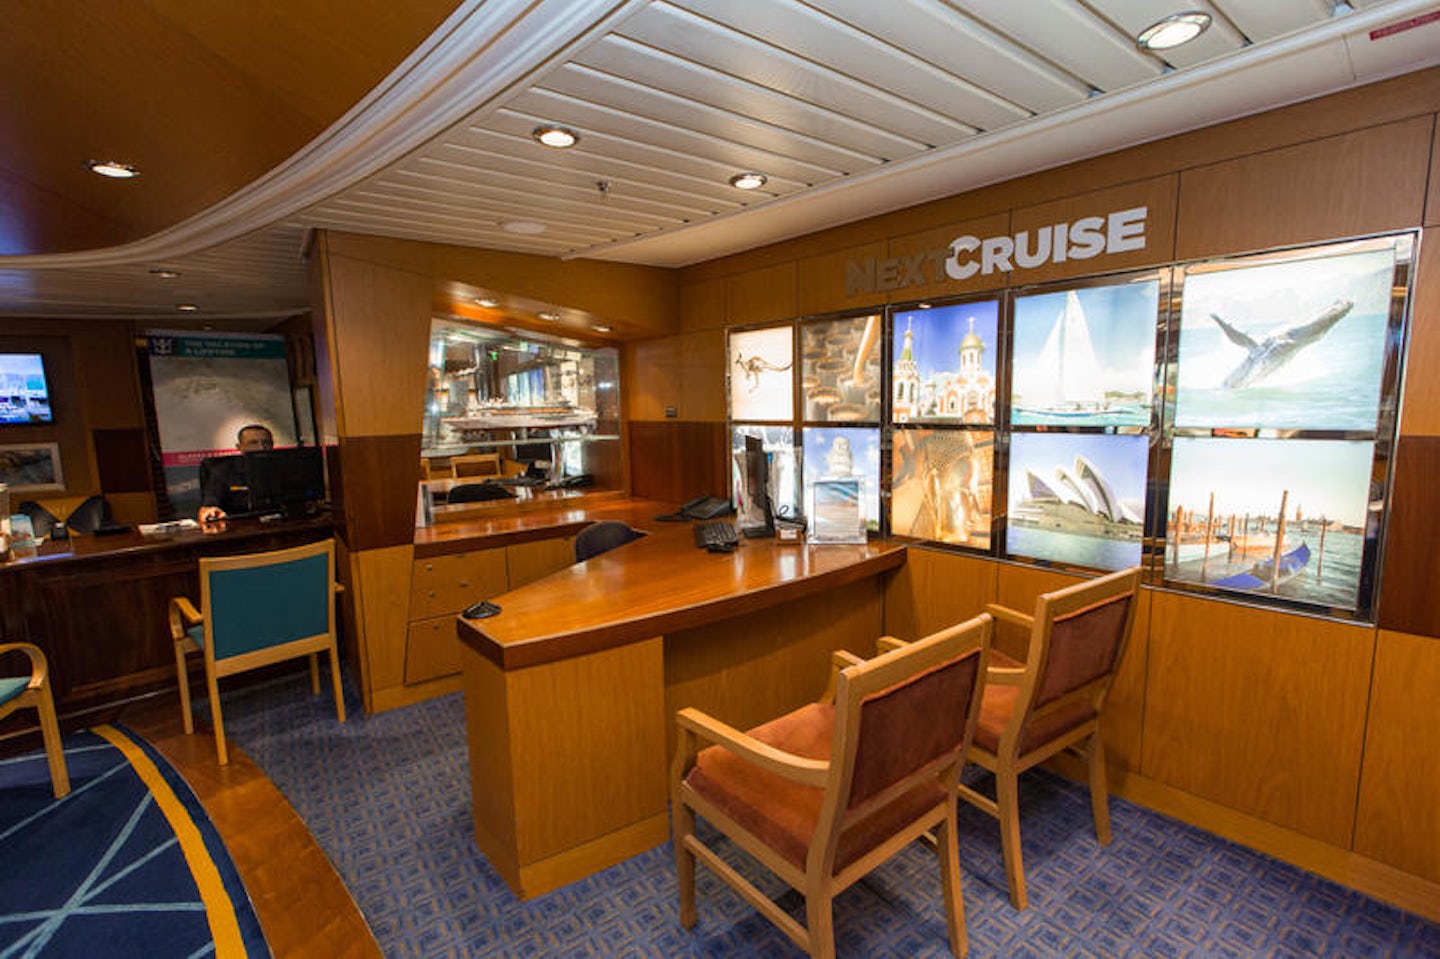 Next Cruise on Navigator of the Seas